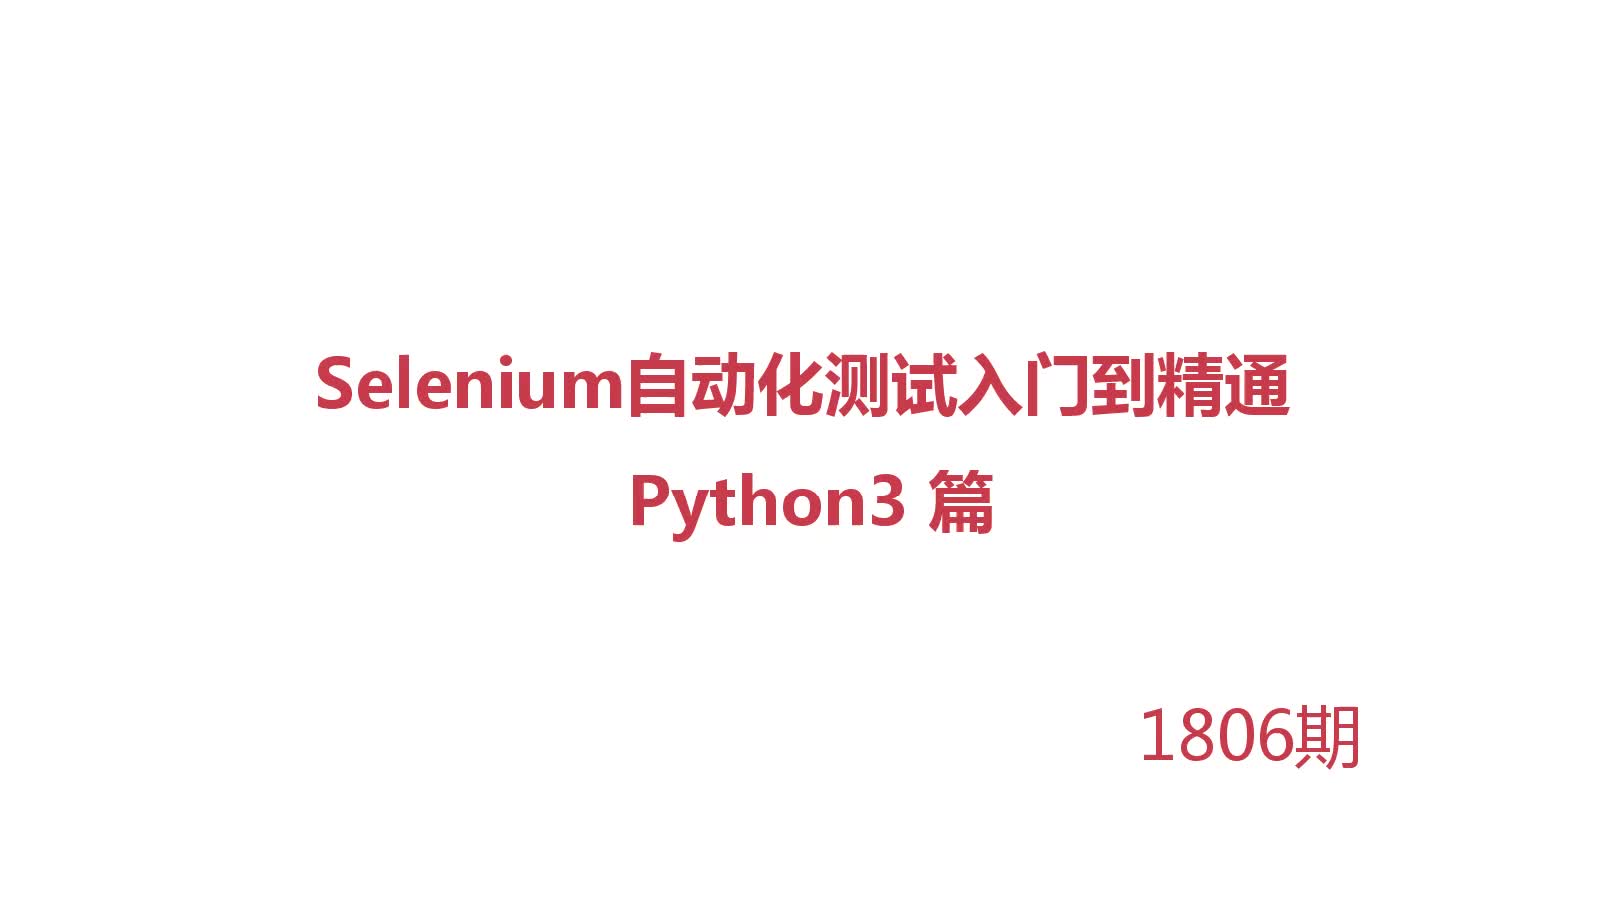 Python3 Selenium3 软件自动化测试基础系列视频课程